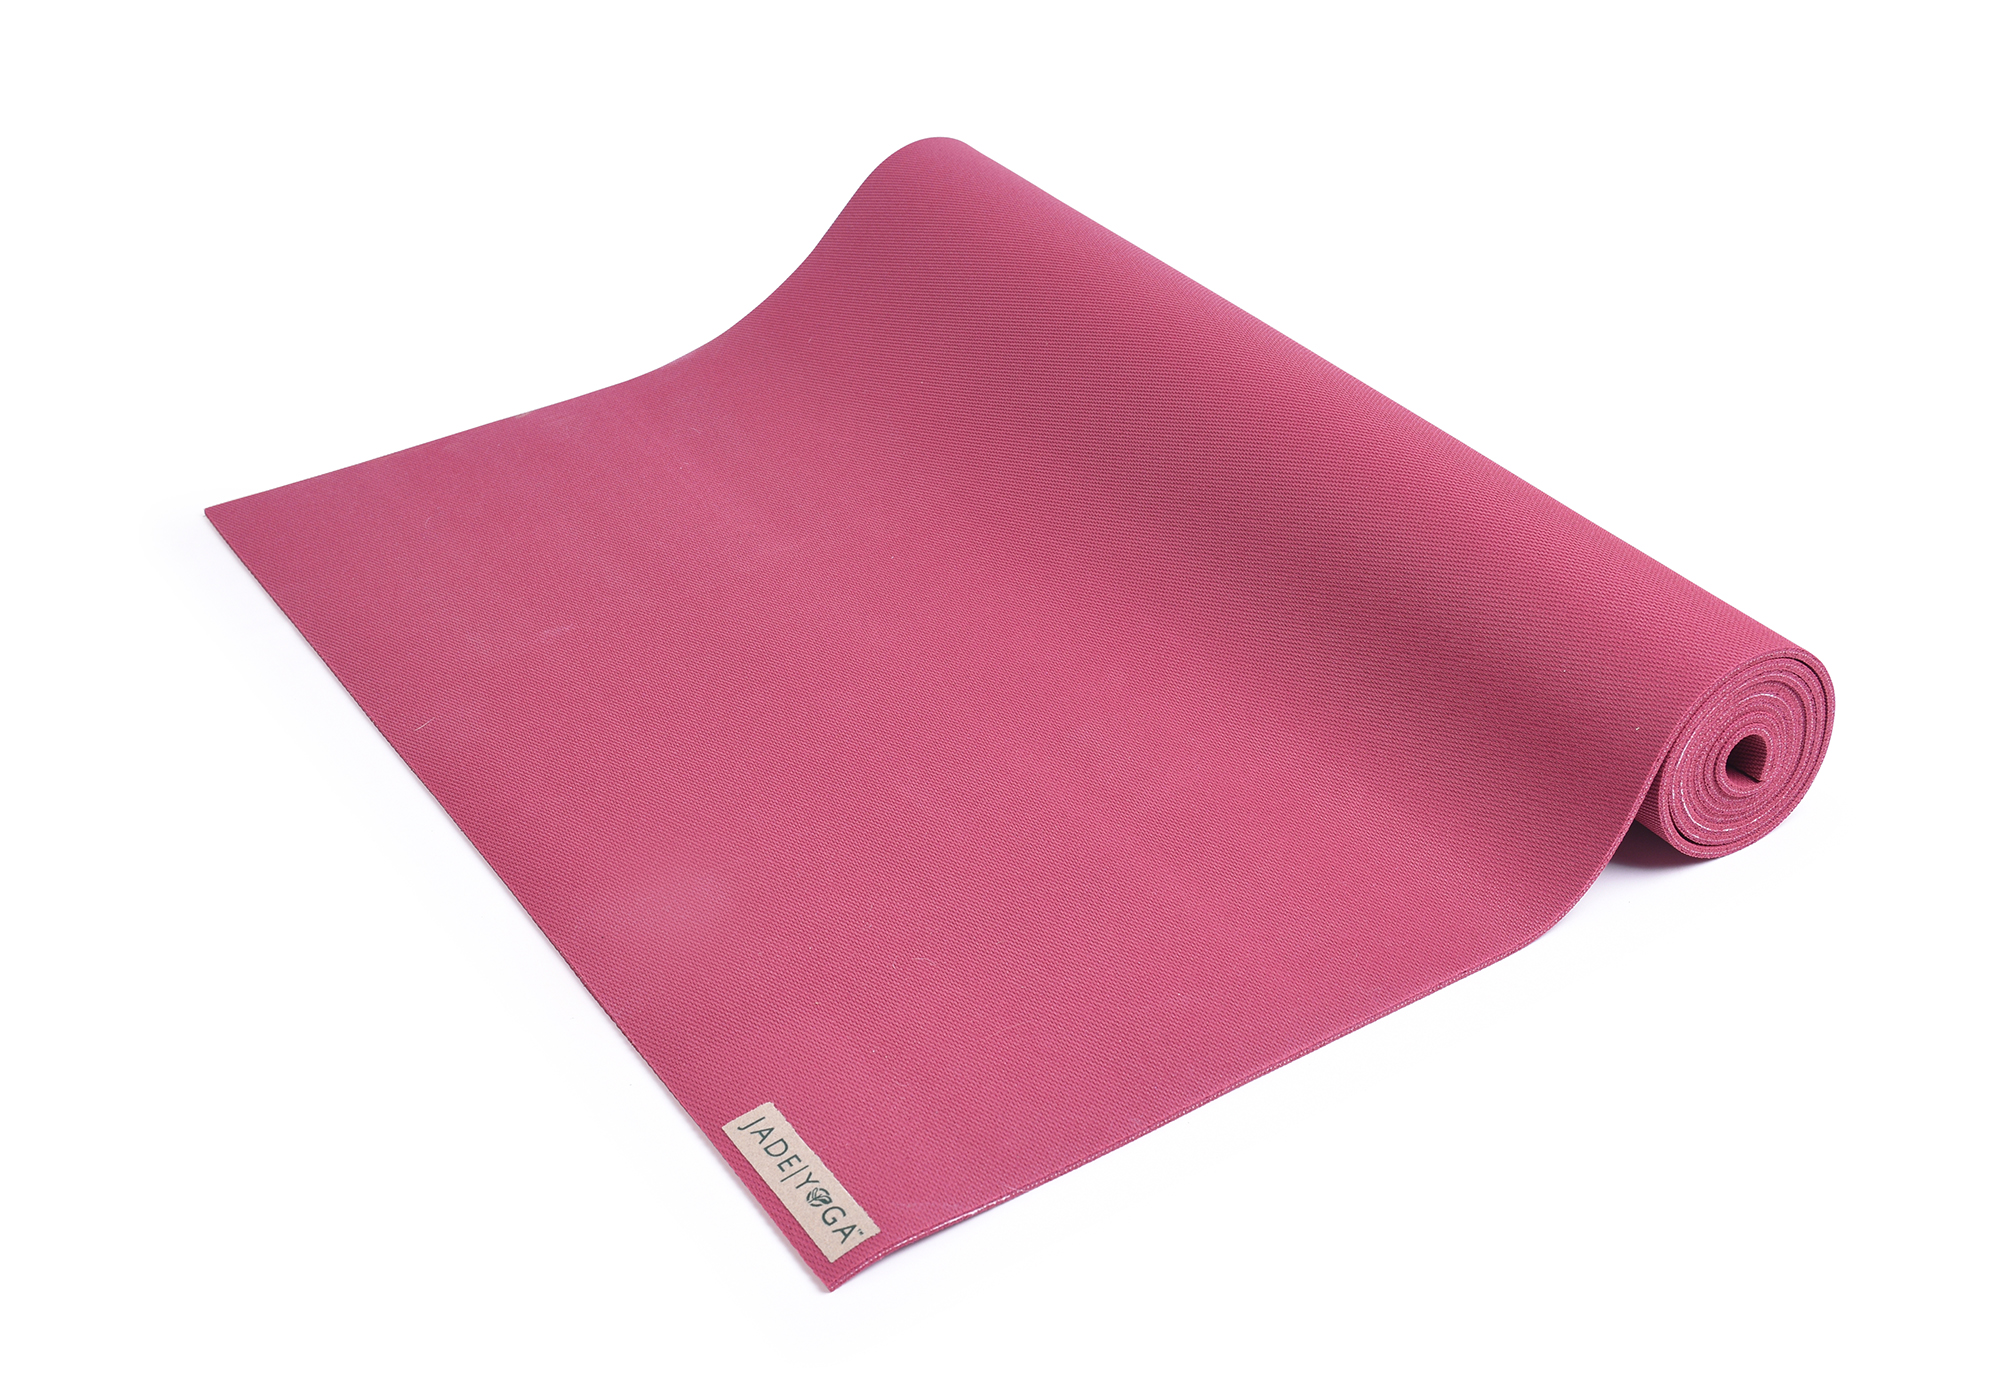 Buy Jade Harmony Professional 68-inch x 3/16-Inch Yoga Mat (Black